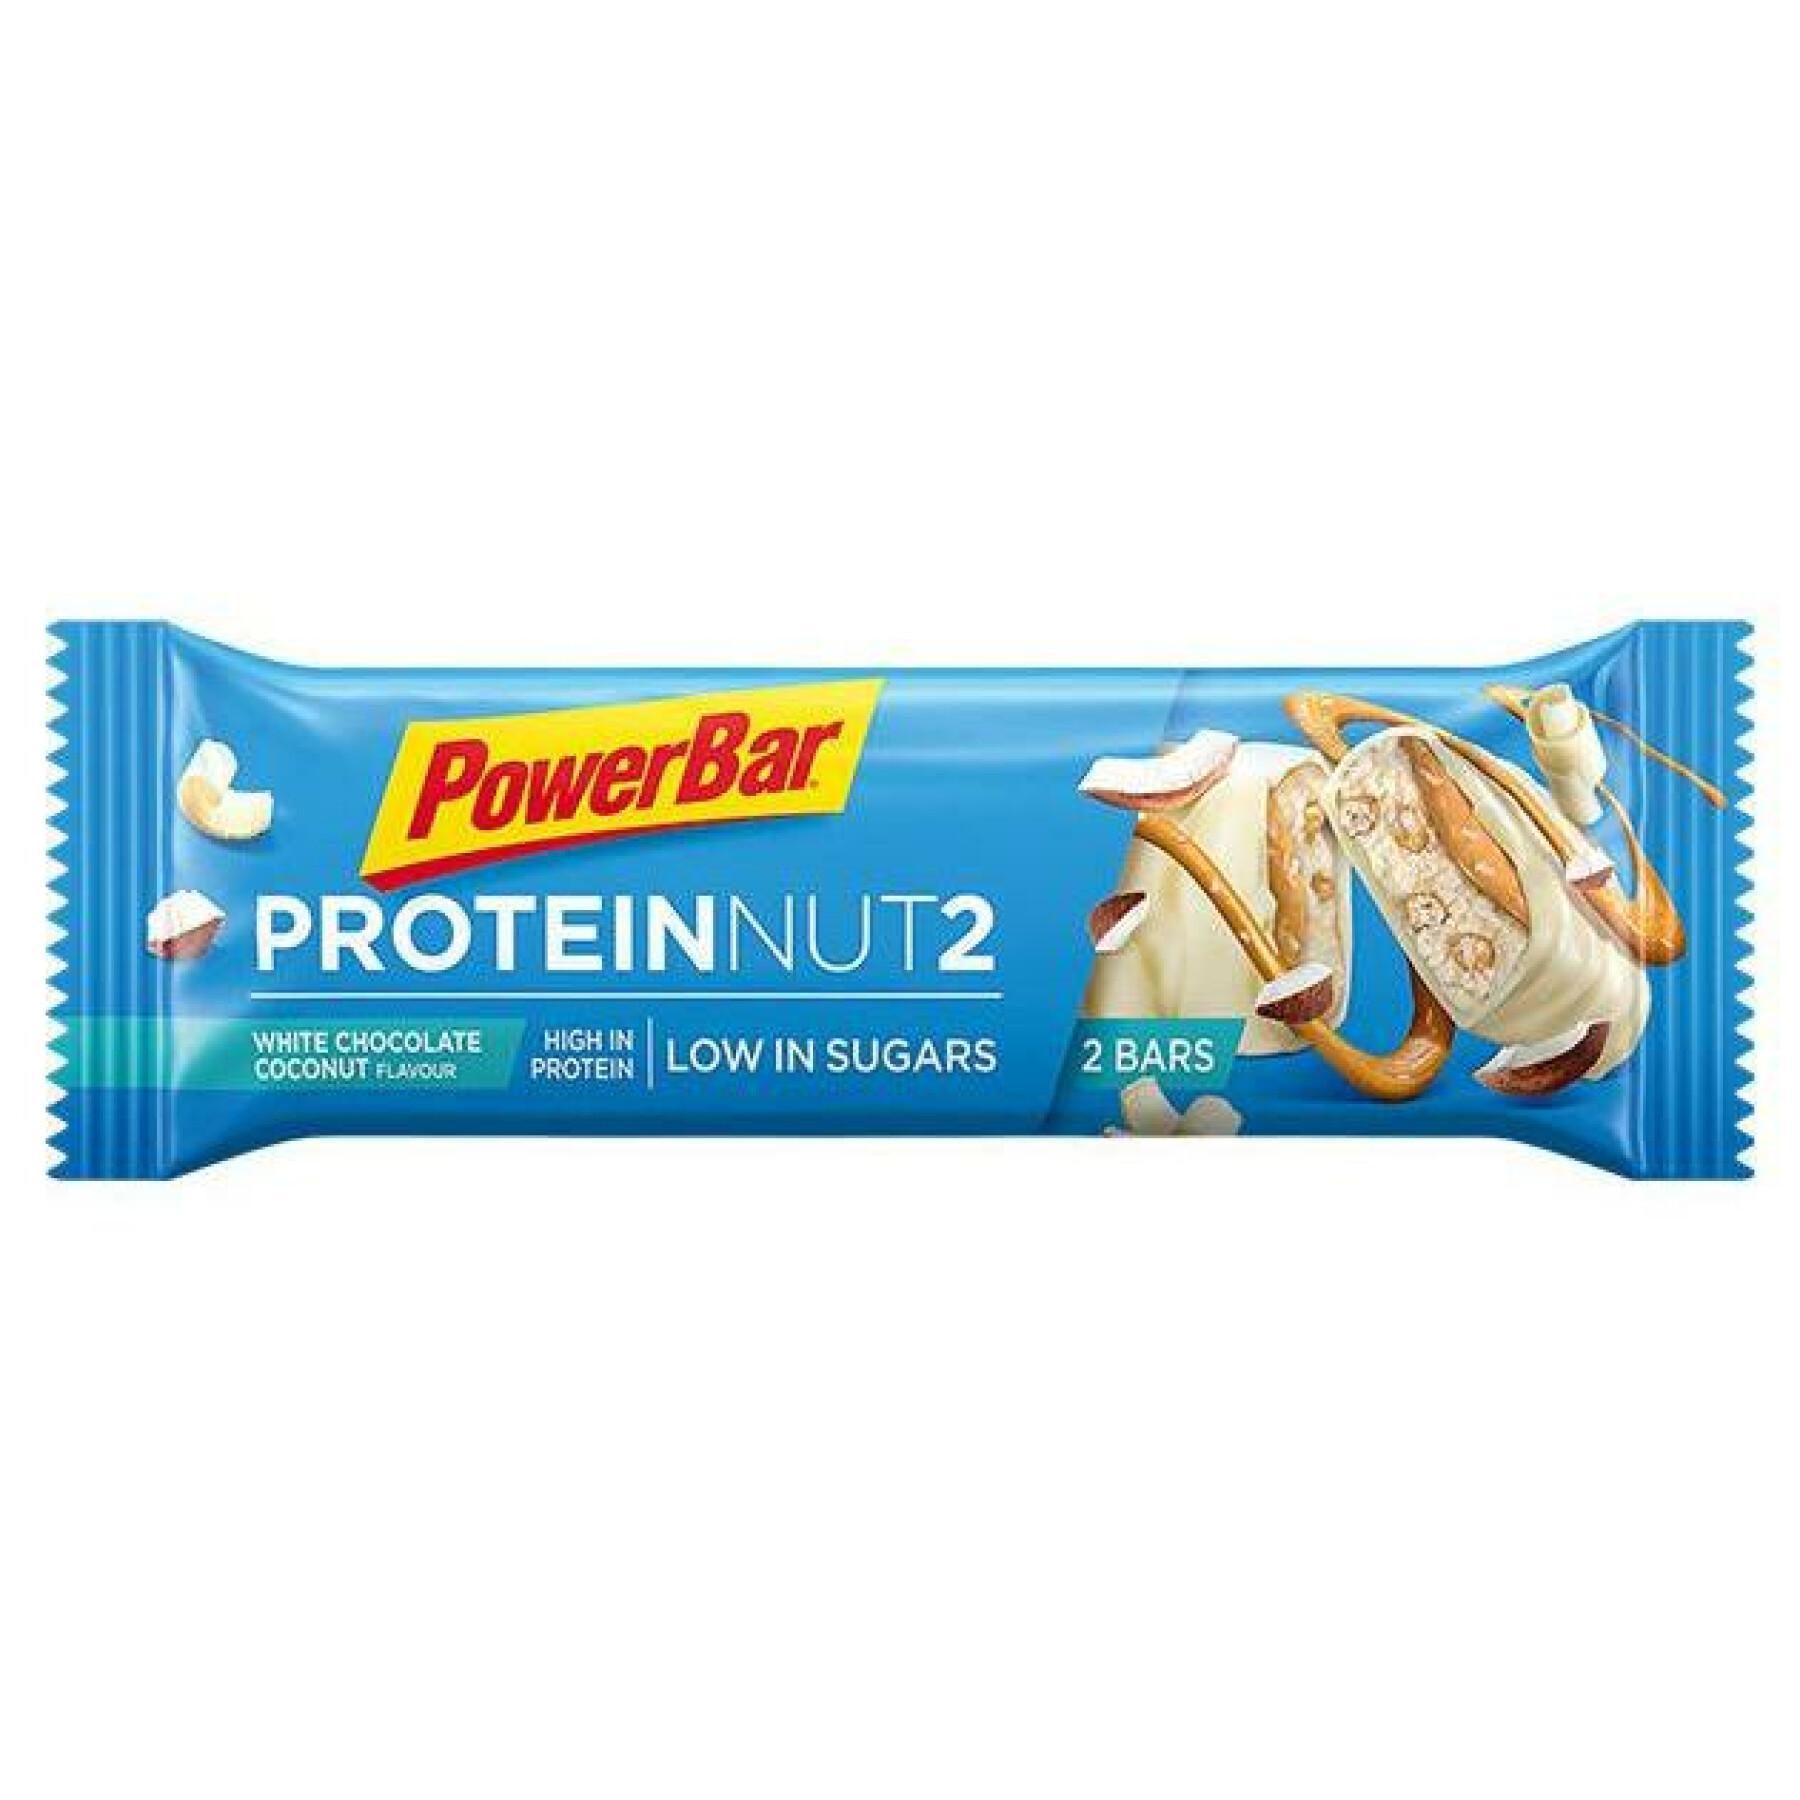 Paquete de 18 barras PowerBar Protein Nut2 - White Chocolate coconut